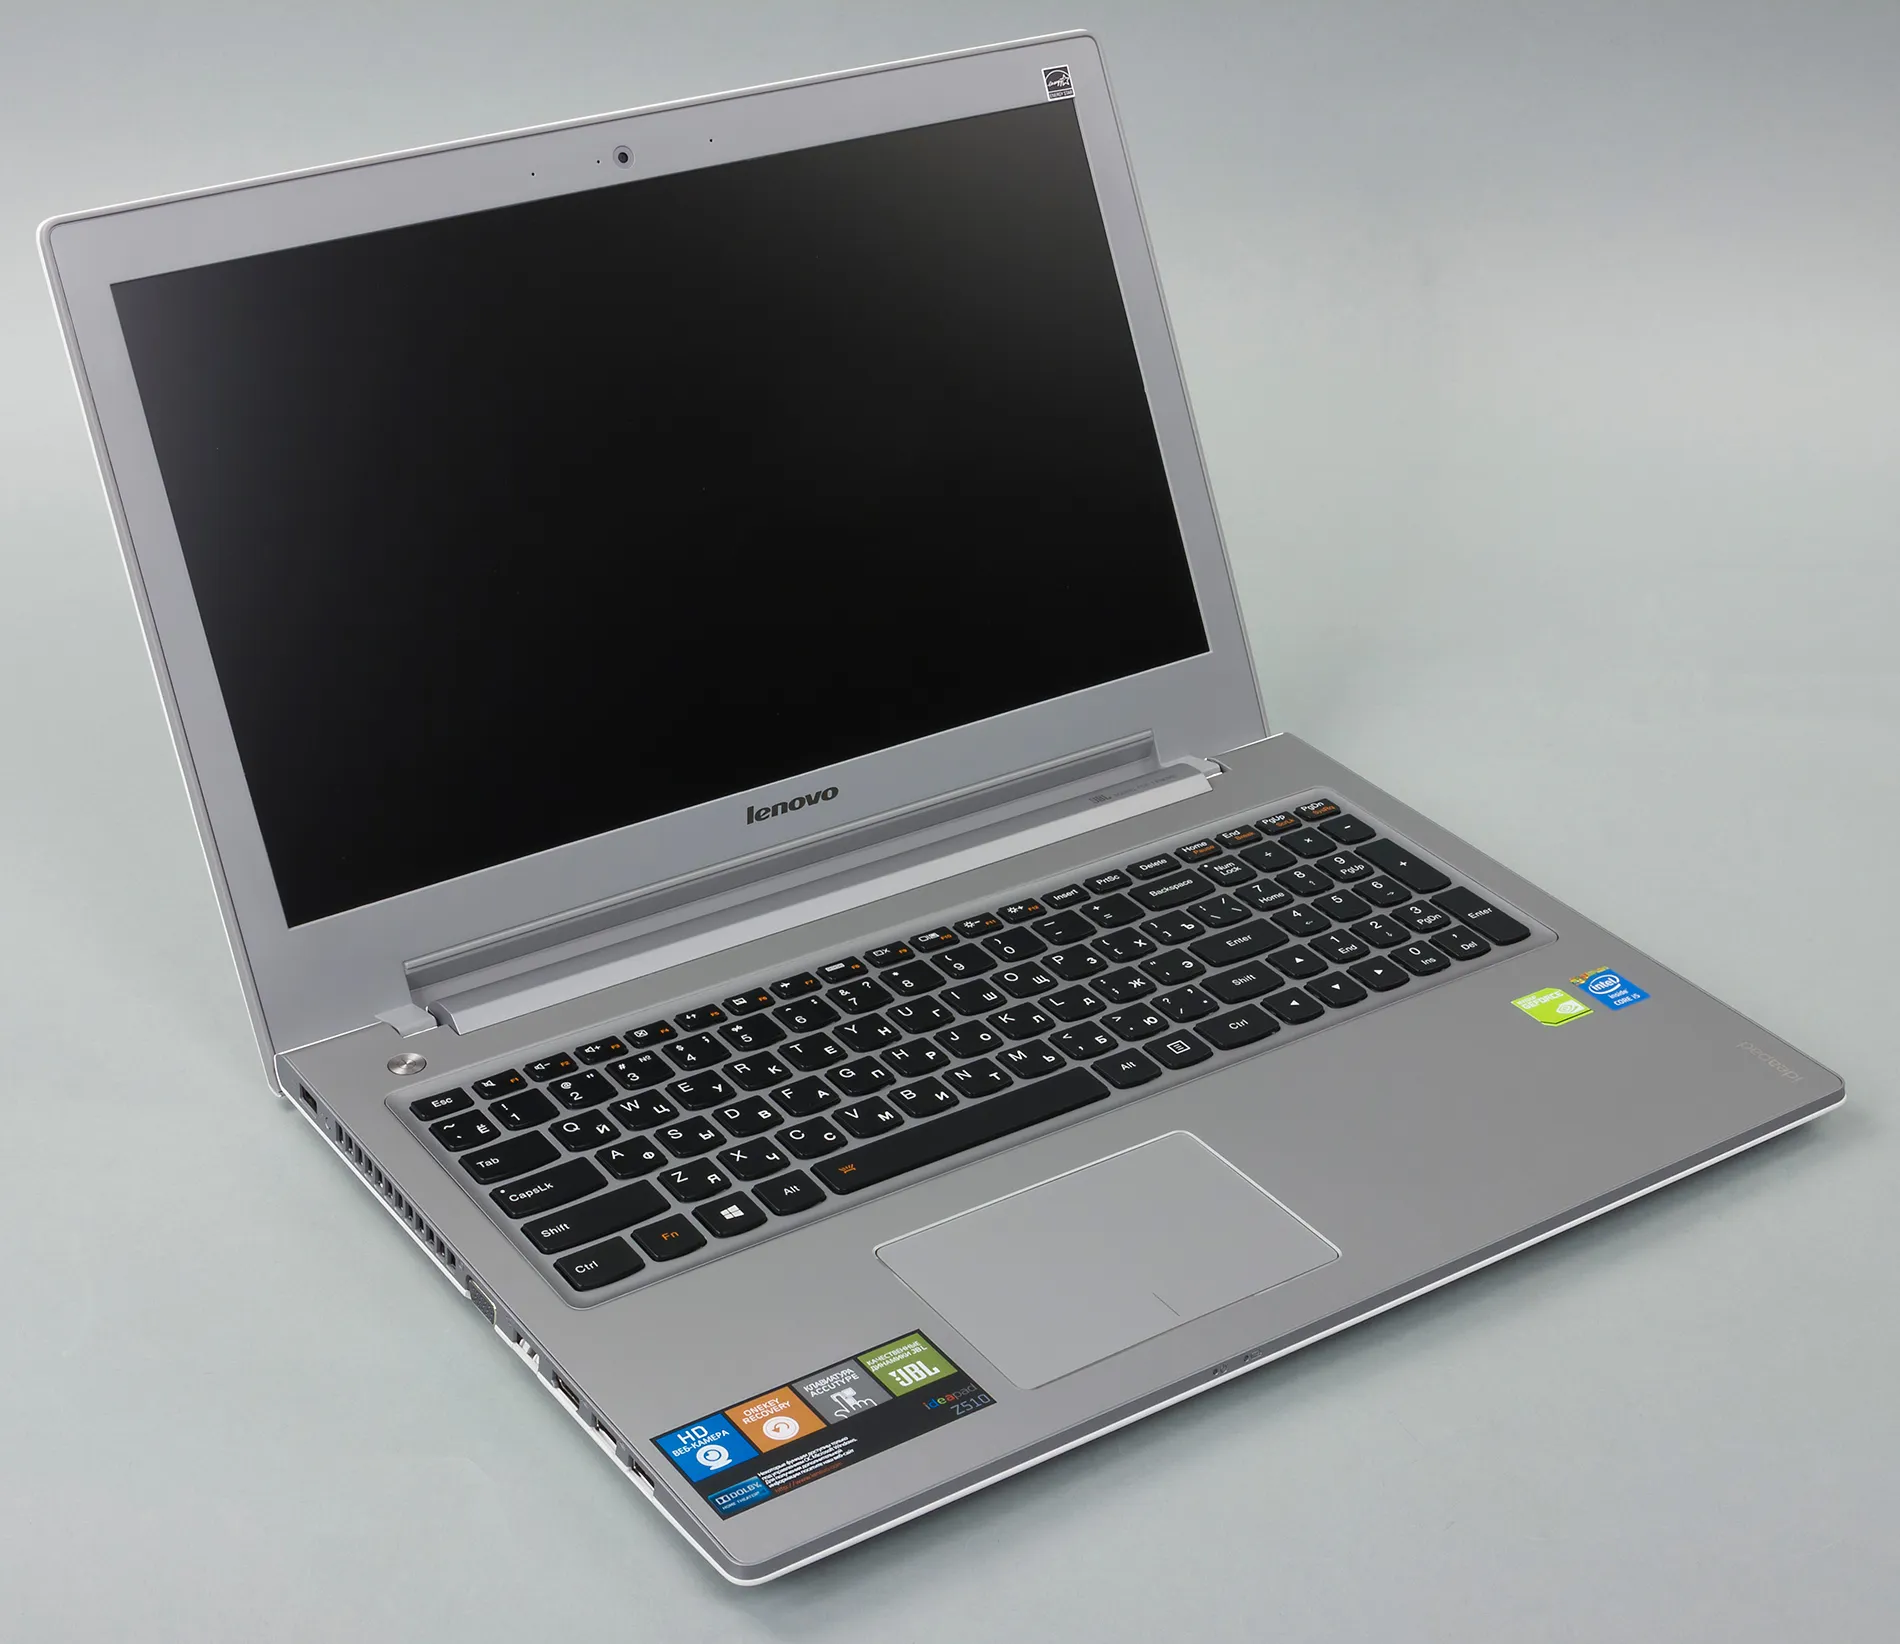 Ноутбук Lenovo Ideapad100 /Celeron3060/2 GB DDR3/500GB HDD /15.6" HD LED/UMA/DVD/ RUS (нормальная клав-ра)#9